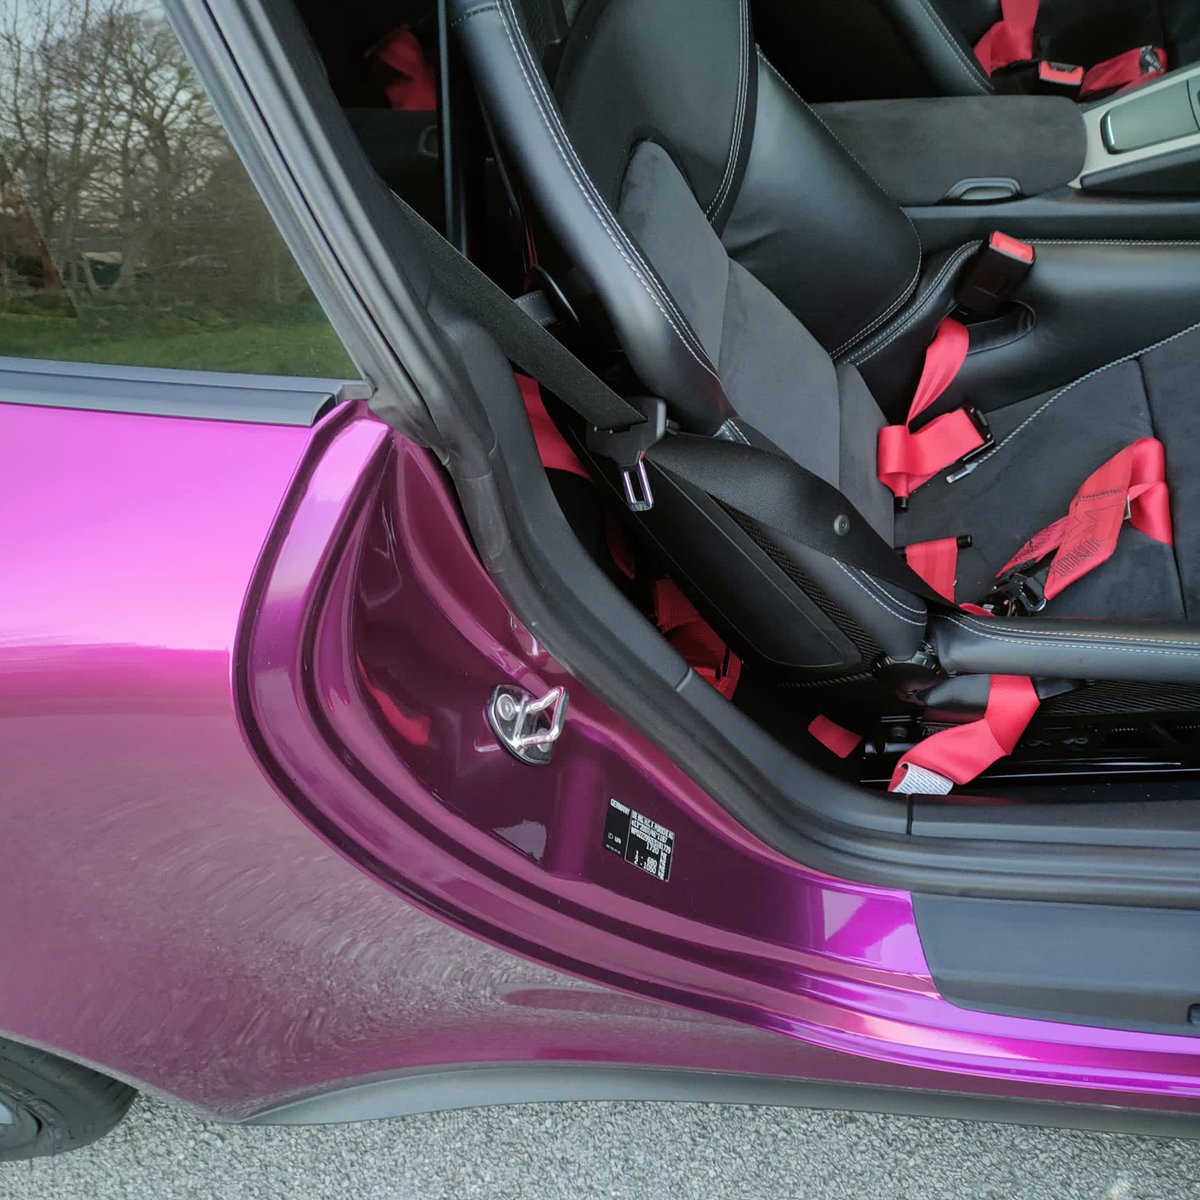 #KKVINYL HGM22T True gloss metallic purple
#ラッピングシート #ボディラッピング #カーラッピングフィルム #クルマ #バイク #スーパーカ #ラッピング #carwrapping #vinylwrap #vehiclewrapping #バイク乗りと繋がりたい #痛車製作